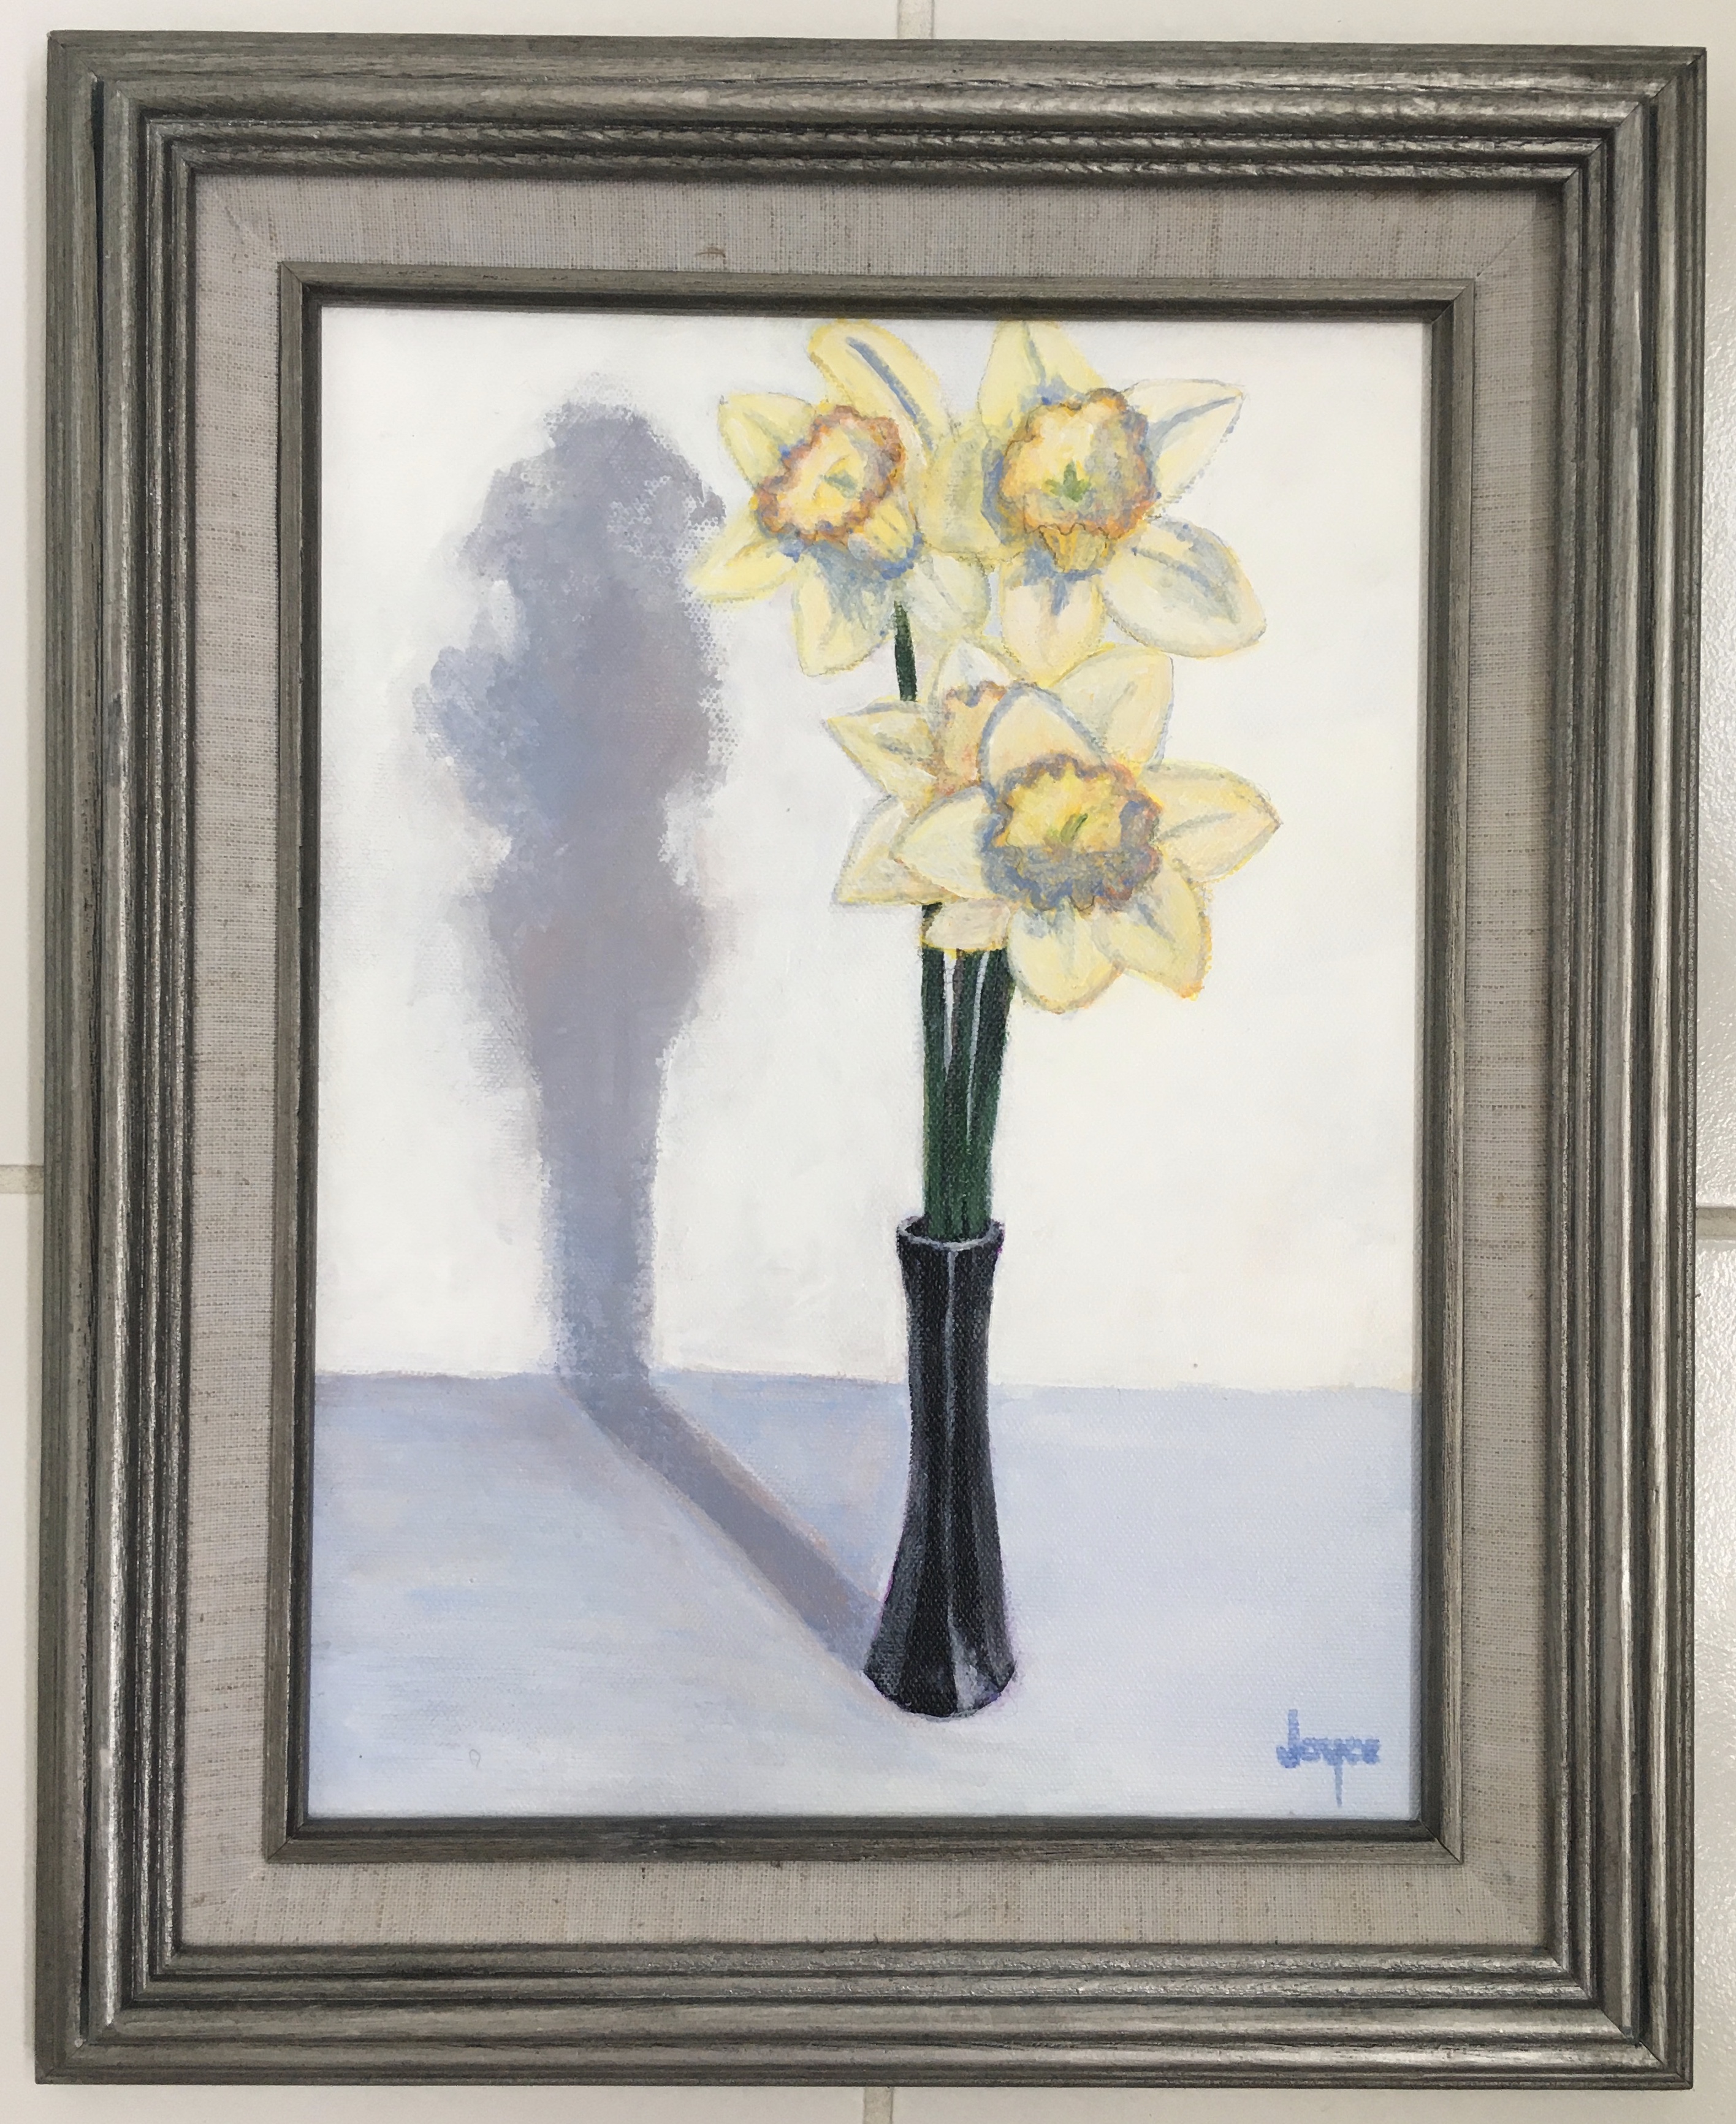 Daffodils by the Sea - Original art by Joyce Frederick